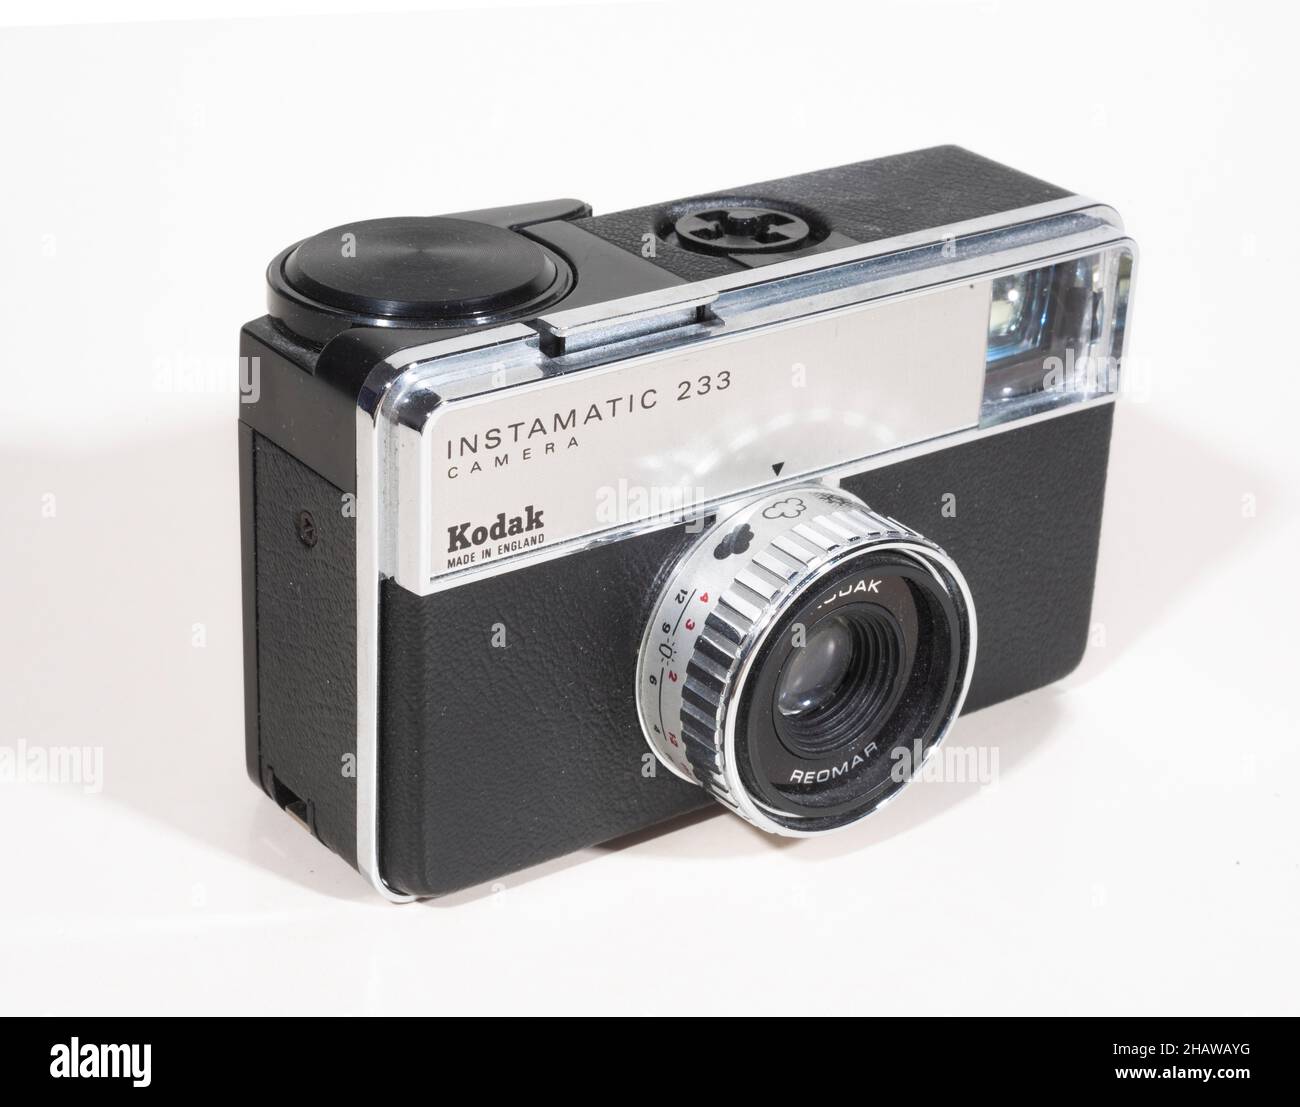 Kodak Instamatic 233 camera from 1960s Stock Photo